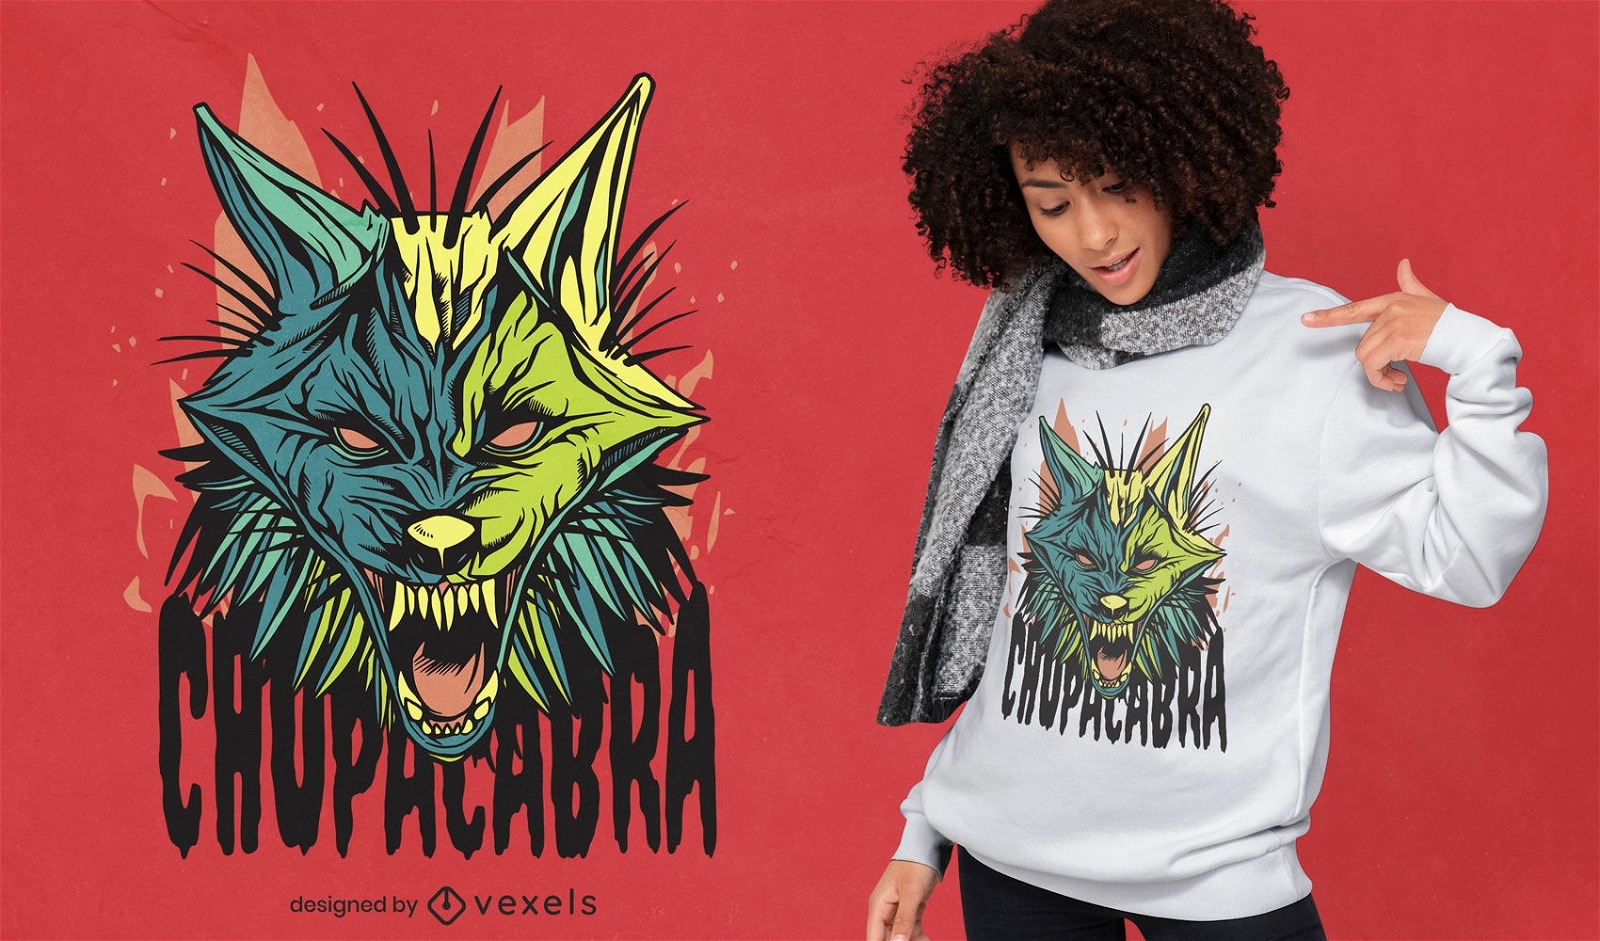 W?tendes Chupacabra-Monster-T-Shirt-Design